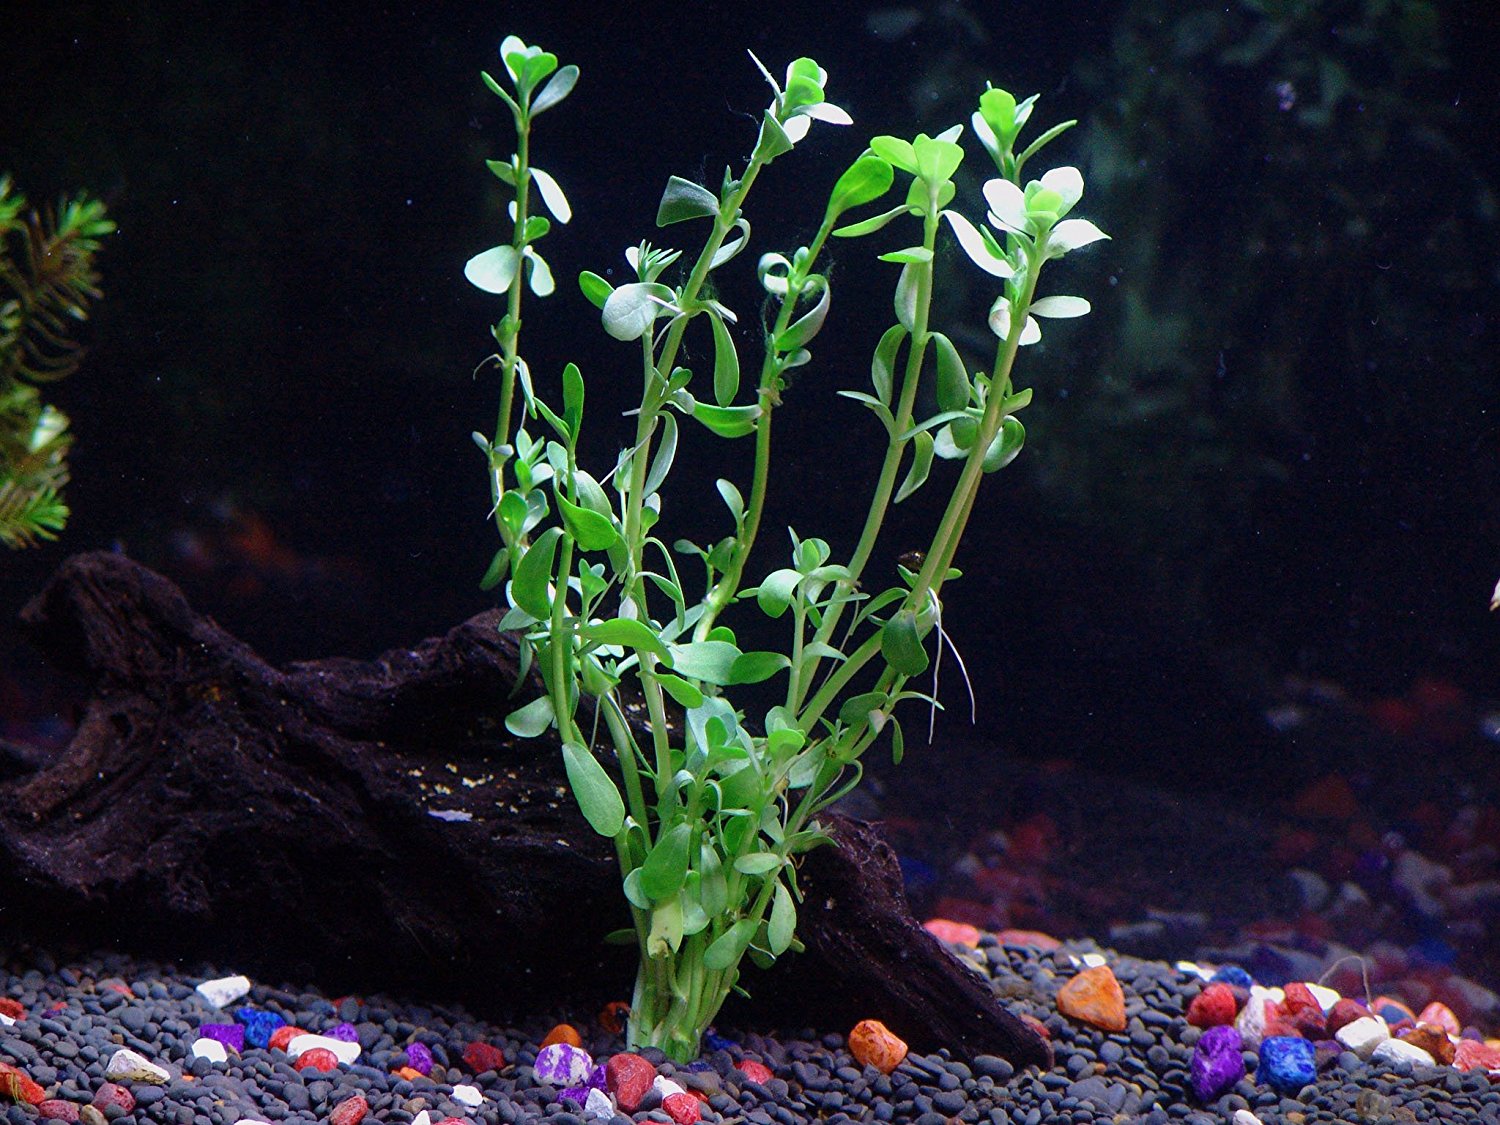  Aquatic Discounts - 3 Different Live Aquarium Plants -  Anacharis + Hornwort + Java Fern BUY2GET1FREE! : Pet Supplies